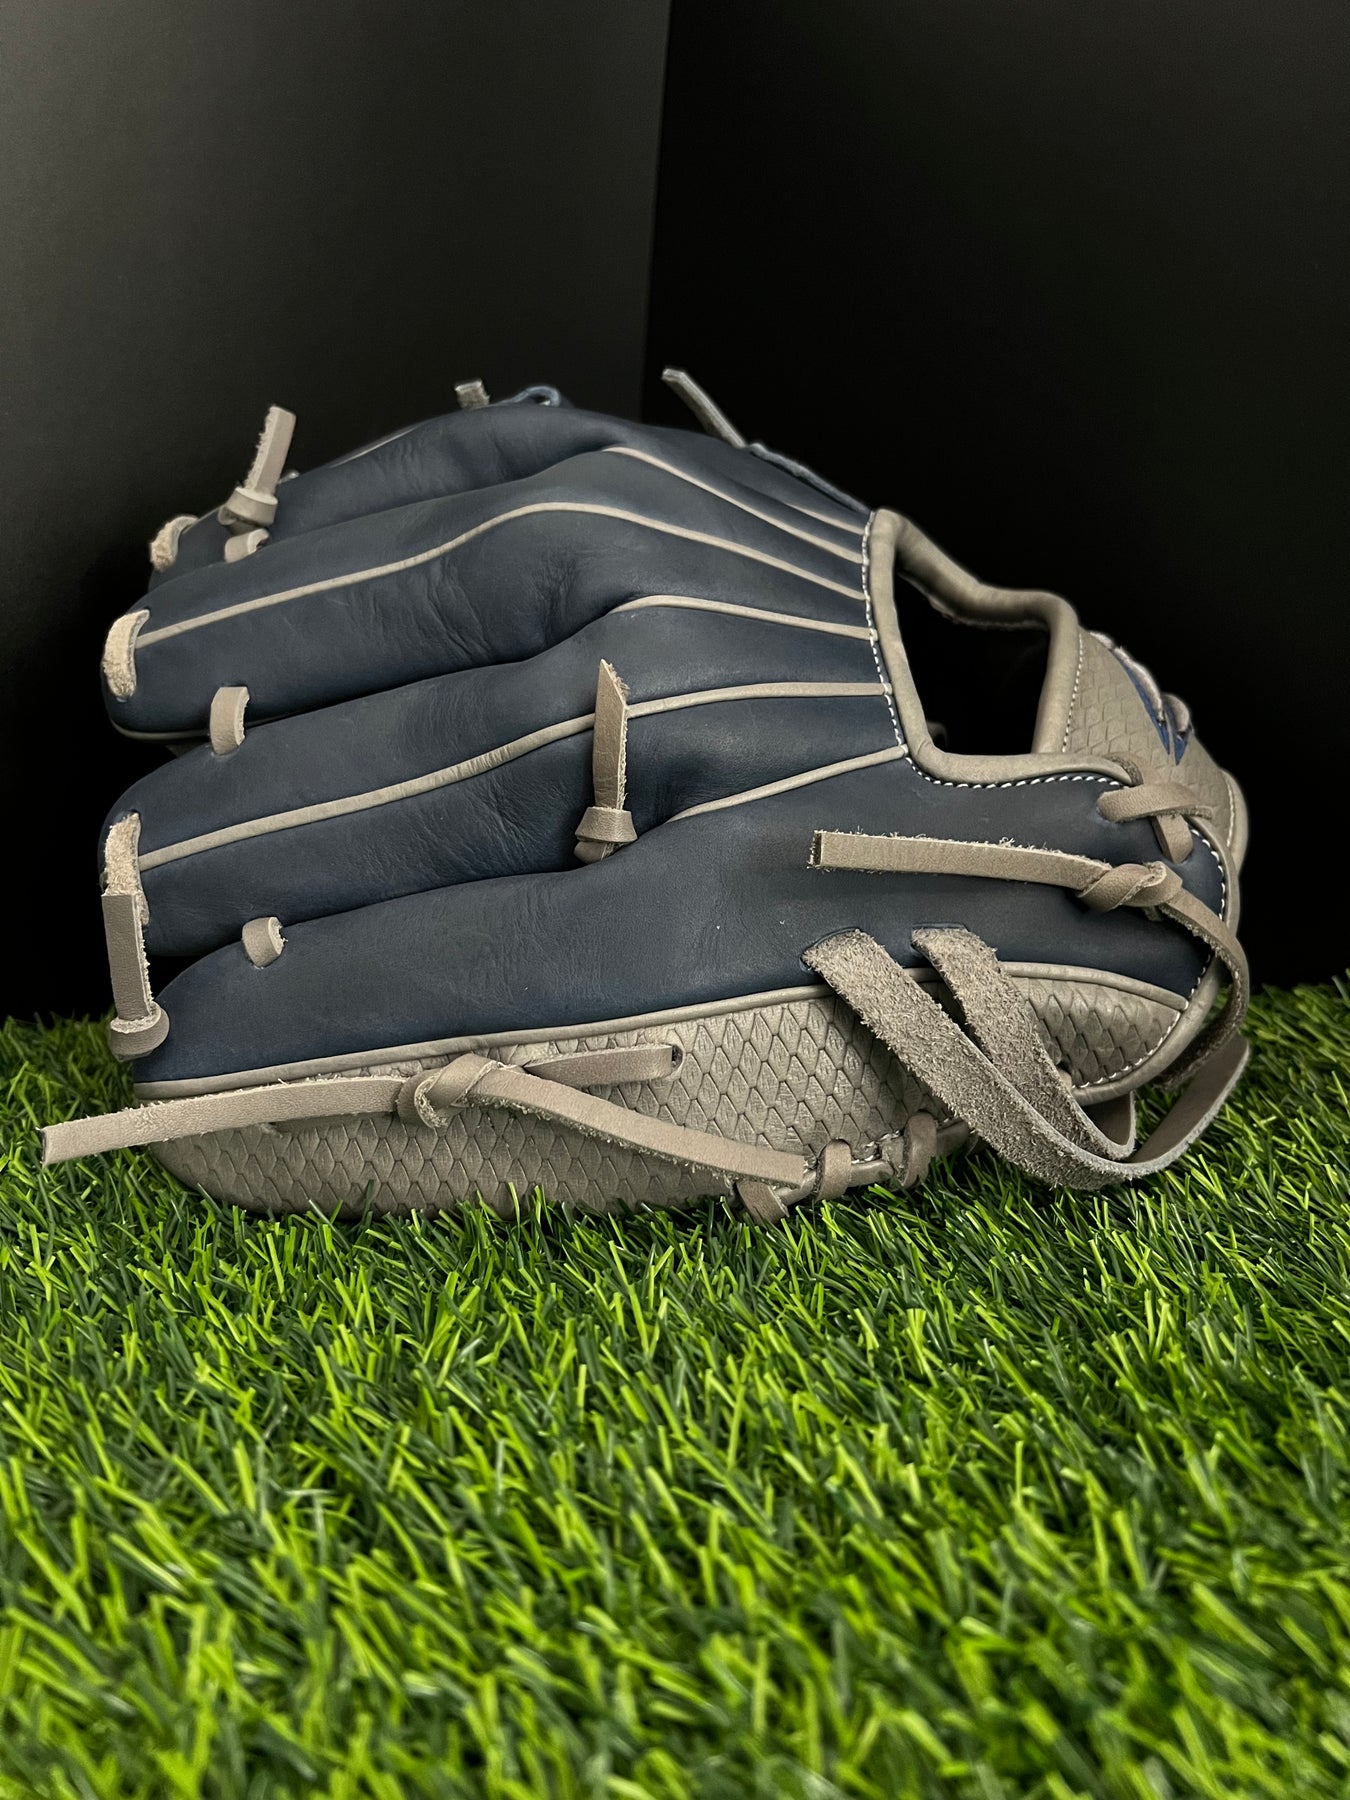 *CLOSEOUT* Mexican Kip - Navy/Grey - I-Web Spiral Lace - Elite Infield  Baseball Glove 11.5 - RH Throw